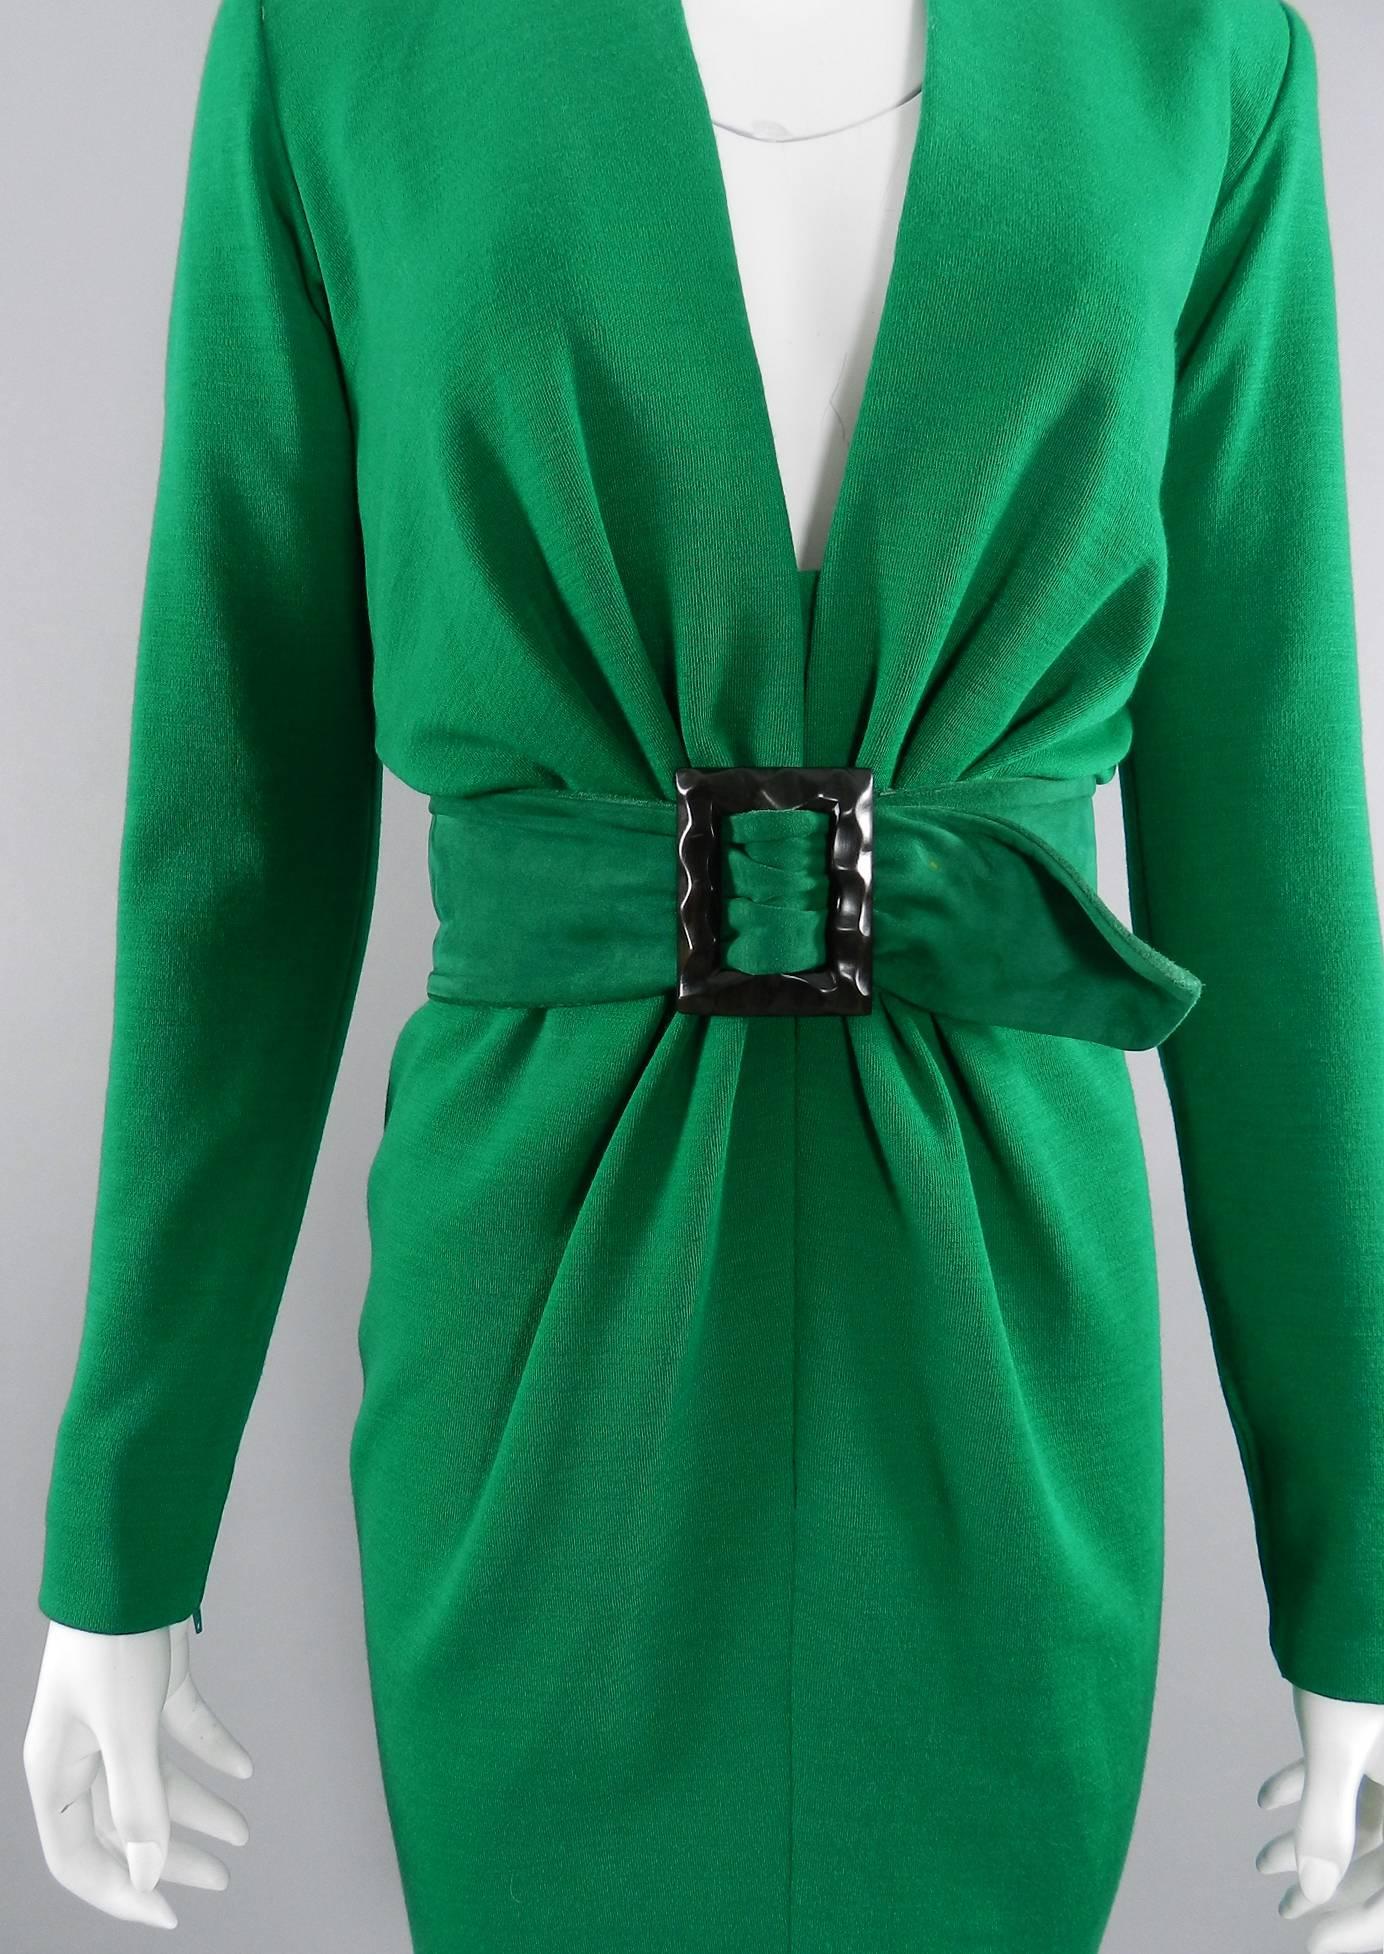 Women's YSL Yves Saint Laurent Haute Couture Vintage 1990's Green Wool Knit Jersey Dress